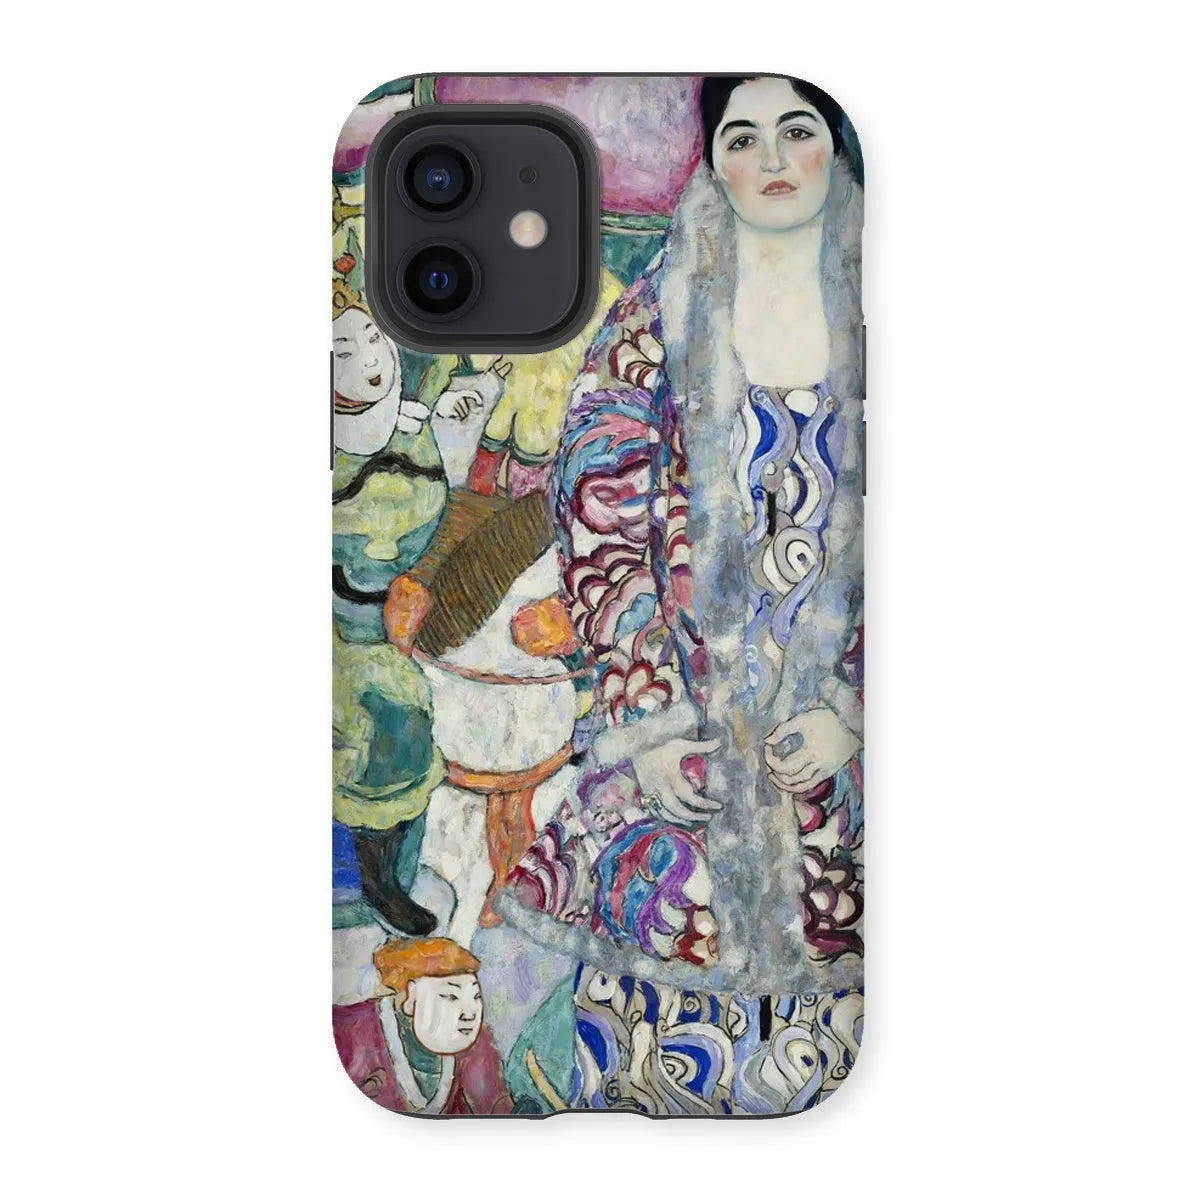 Friederike Maria Beer - Viennese Art Phone Case - Gustav Klimt - Iphone 12 / Matte - Mobile Phone Cases - Aesthetic Art